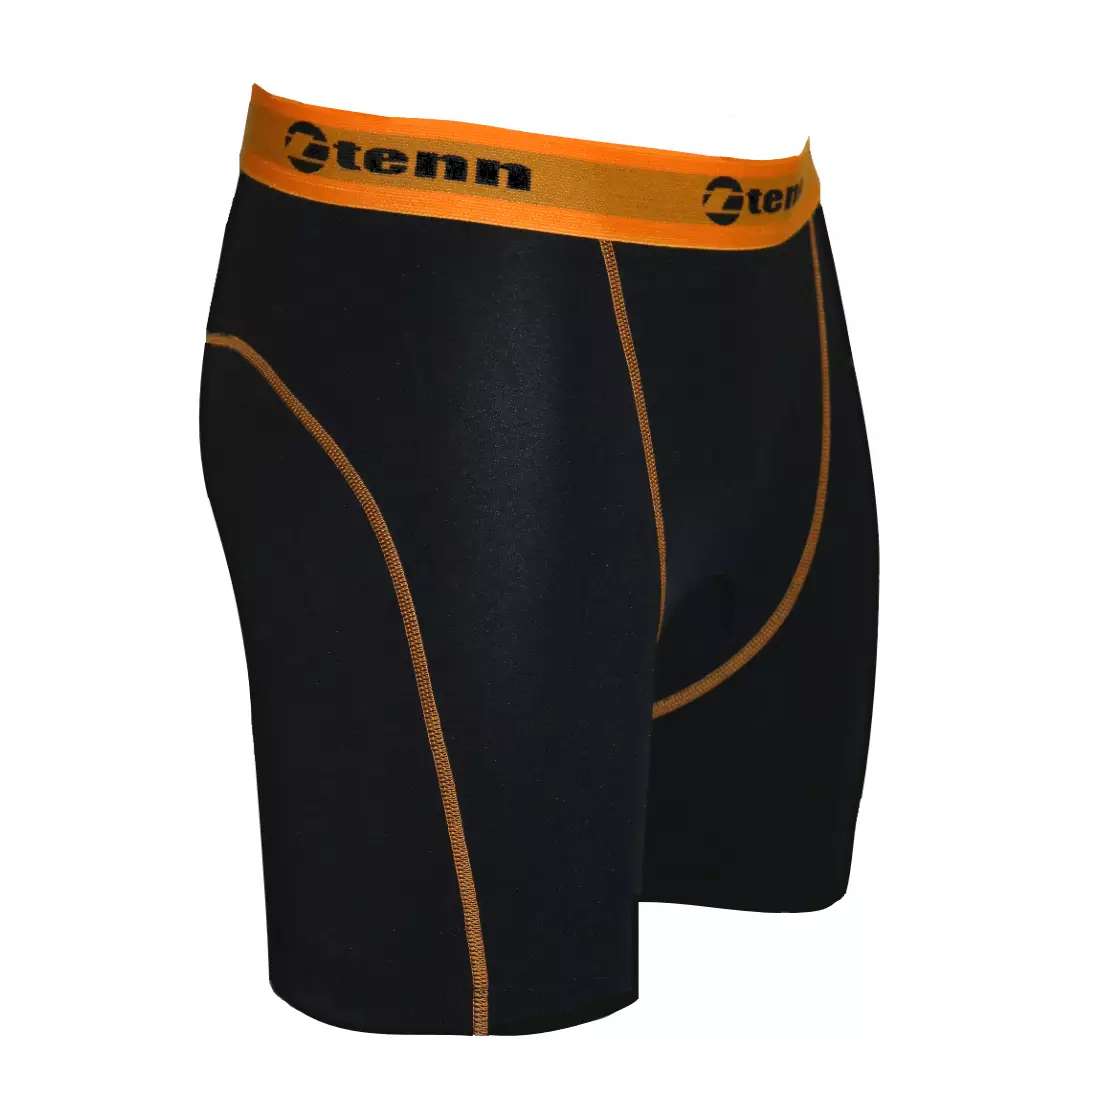 Pánské cyklistické boxerky TENN OUTDOORS COOLFLO černé a oranžové